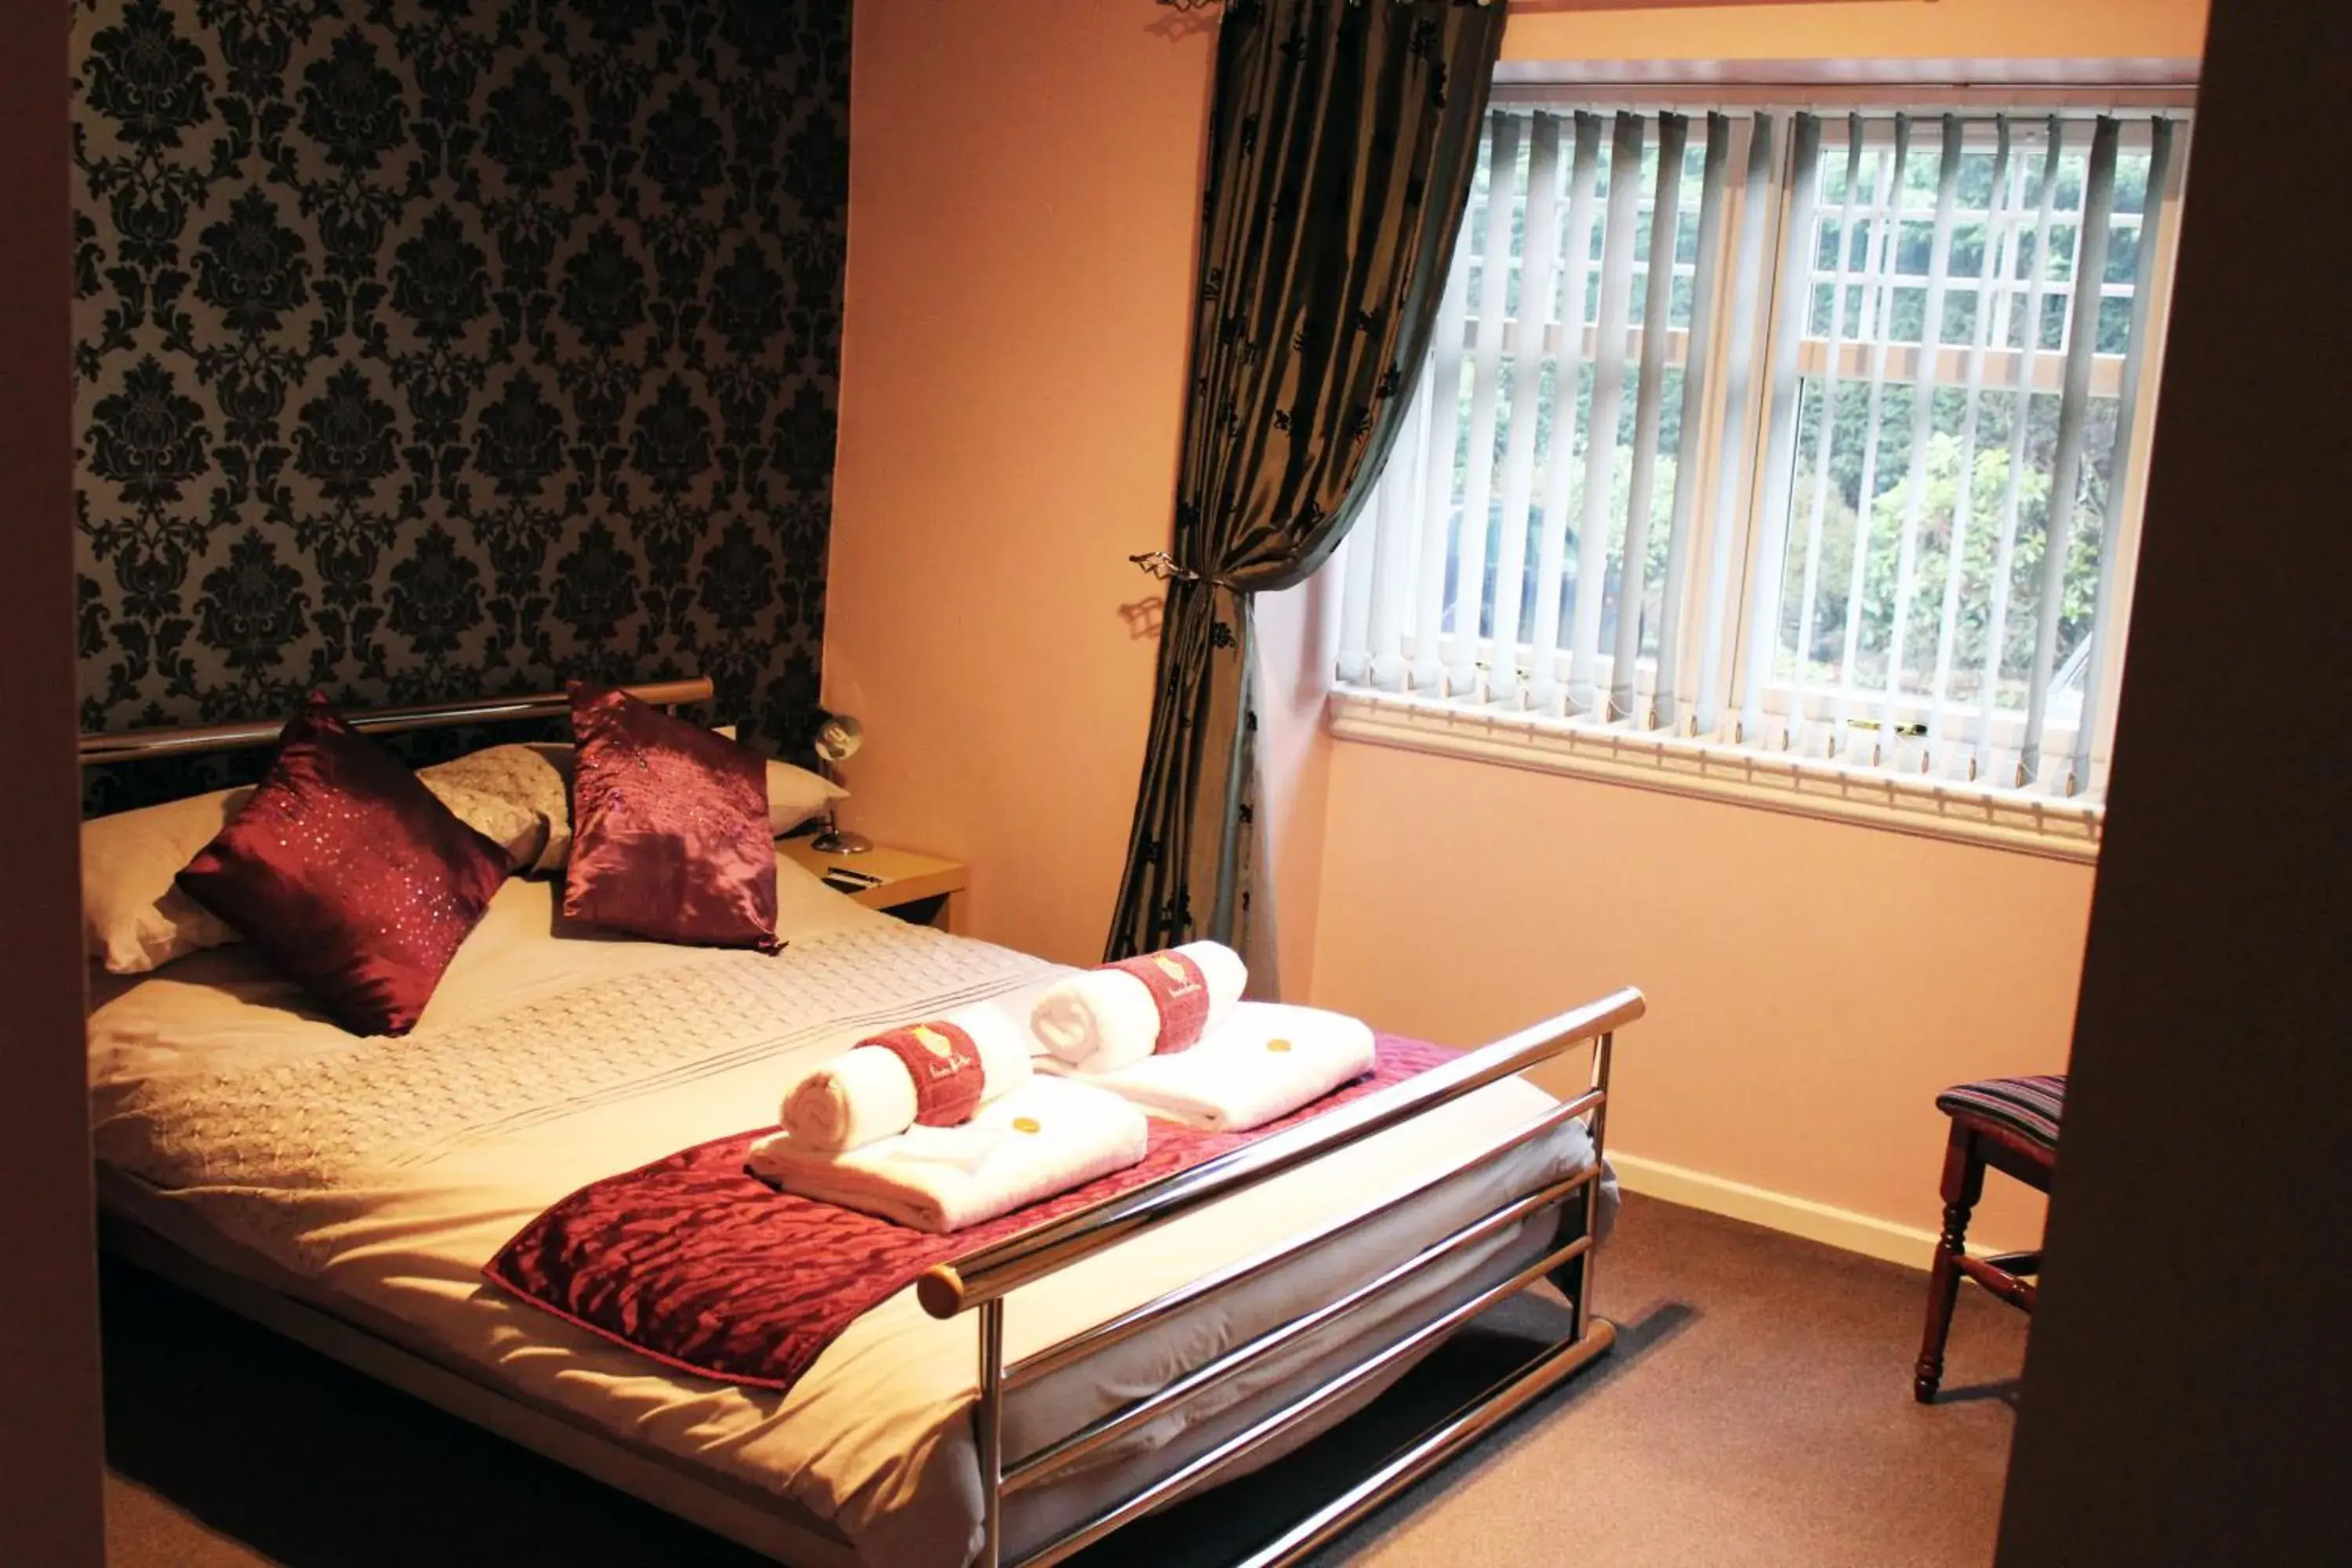 Decorative detail, Bed in Grimscote Manor Hotel